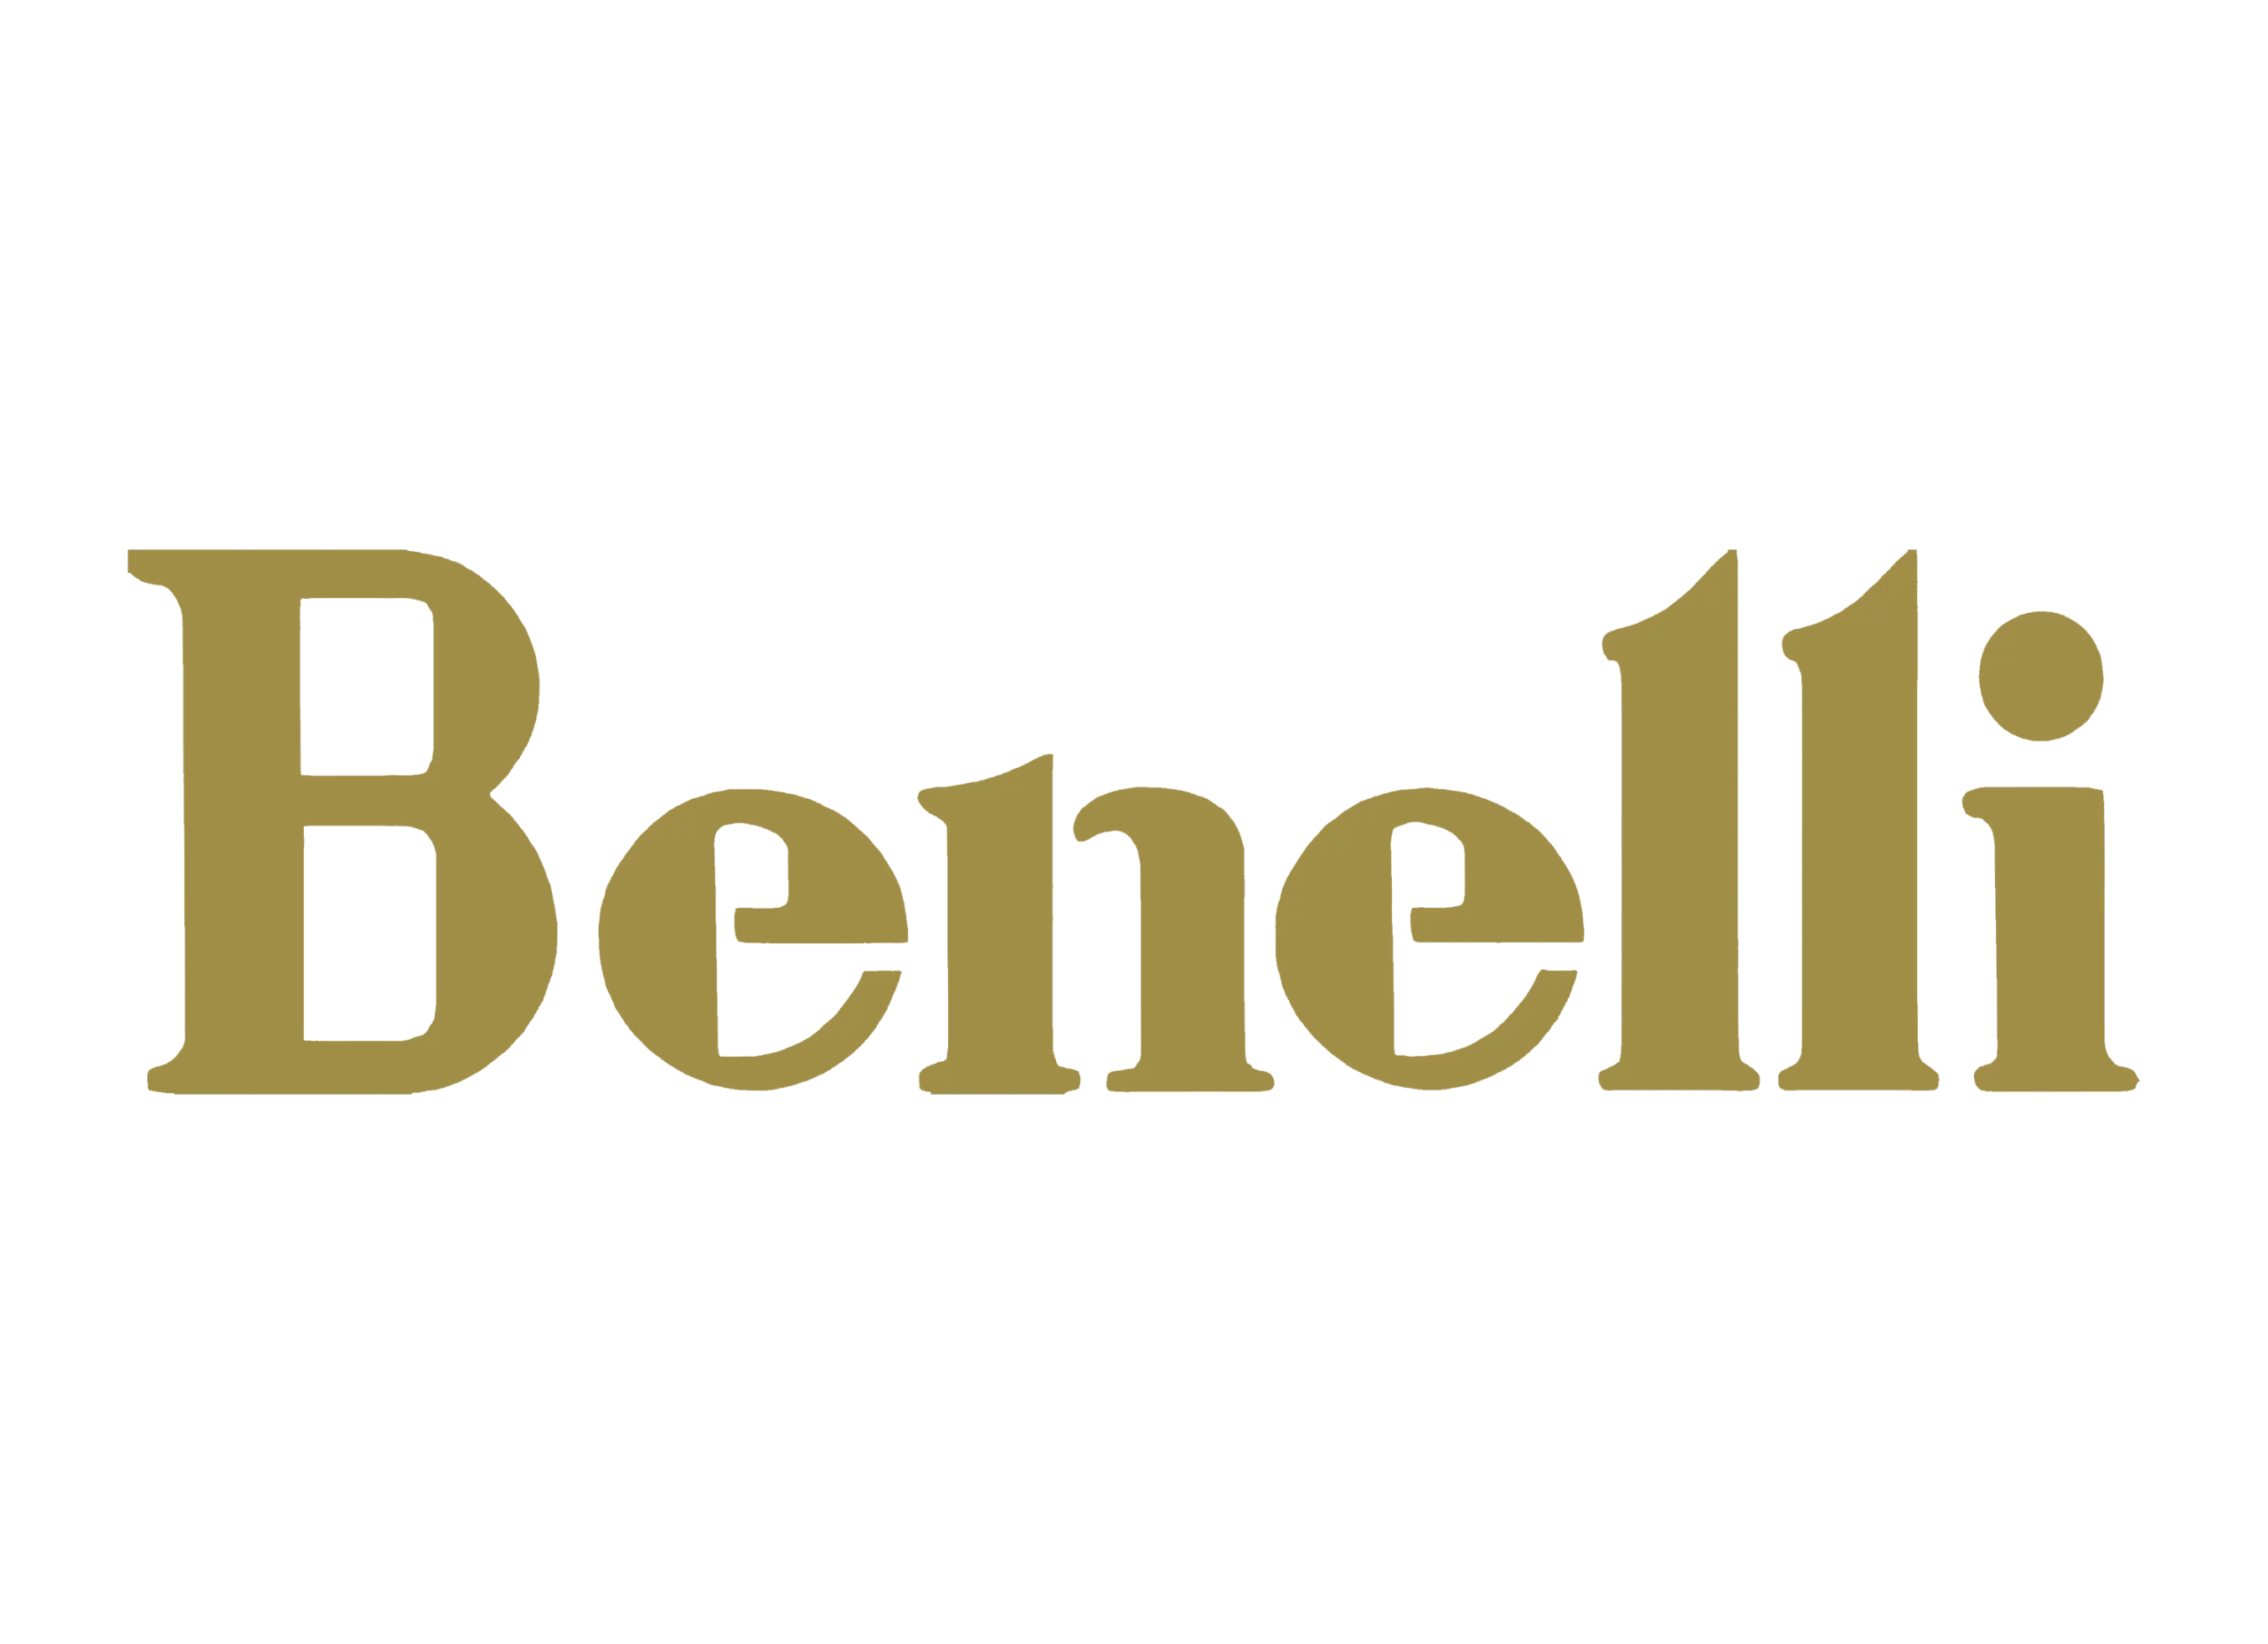 Benelli logo 1972-1995